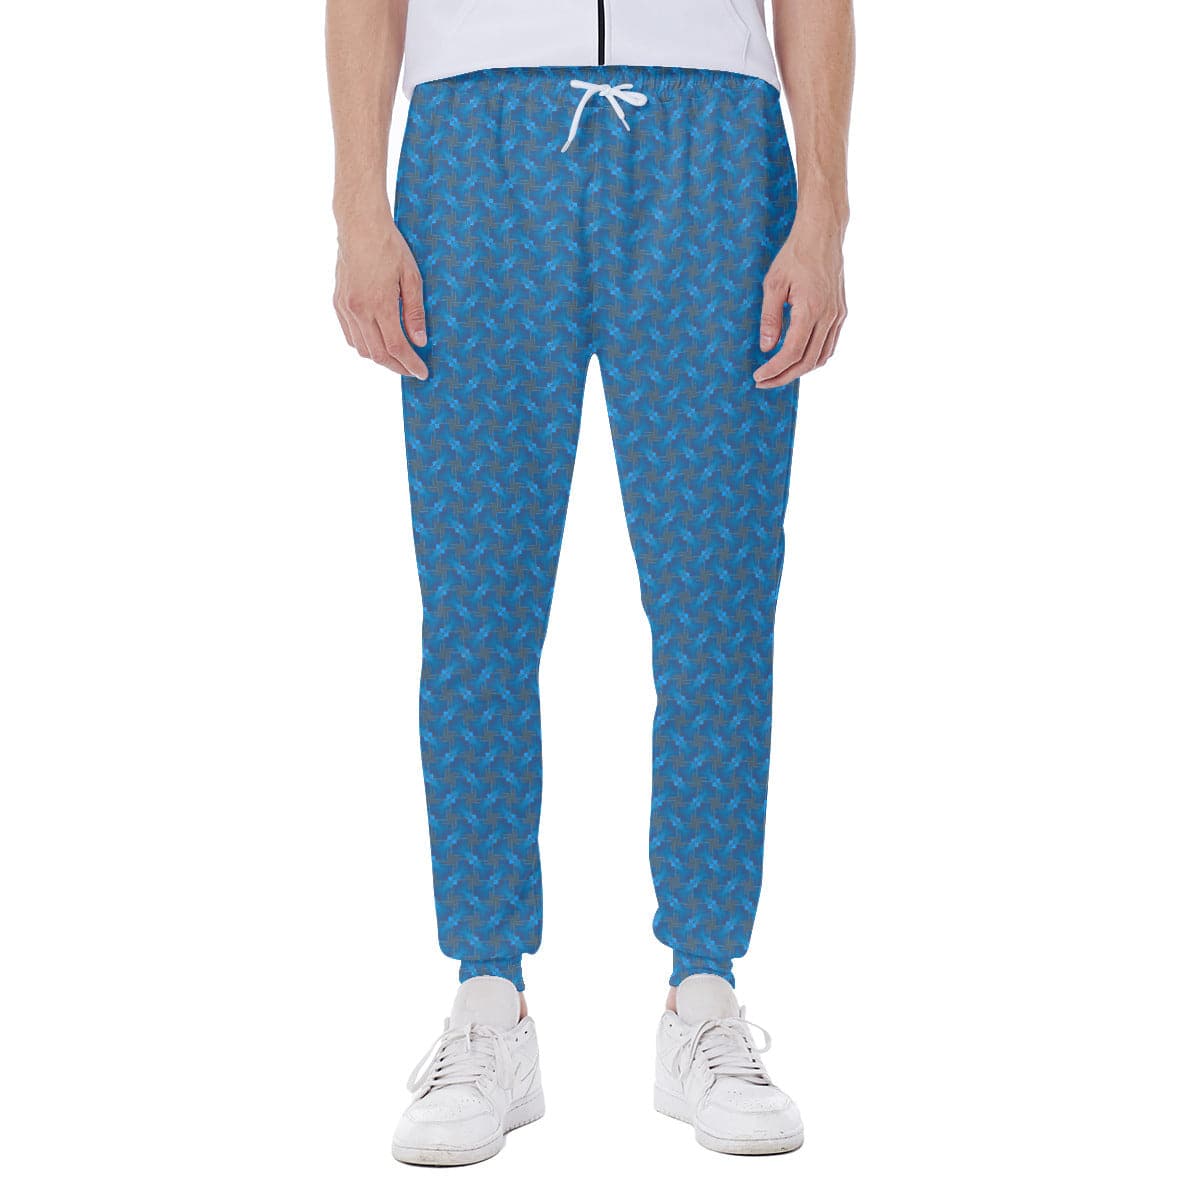 Blue fine patterned Men's Sports and activity Sweatpants, by Sensus studio Design